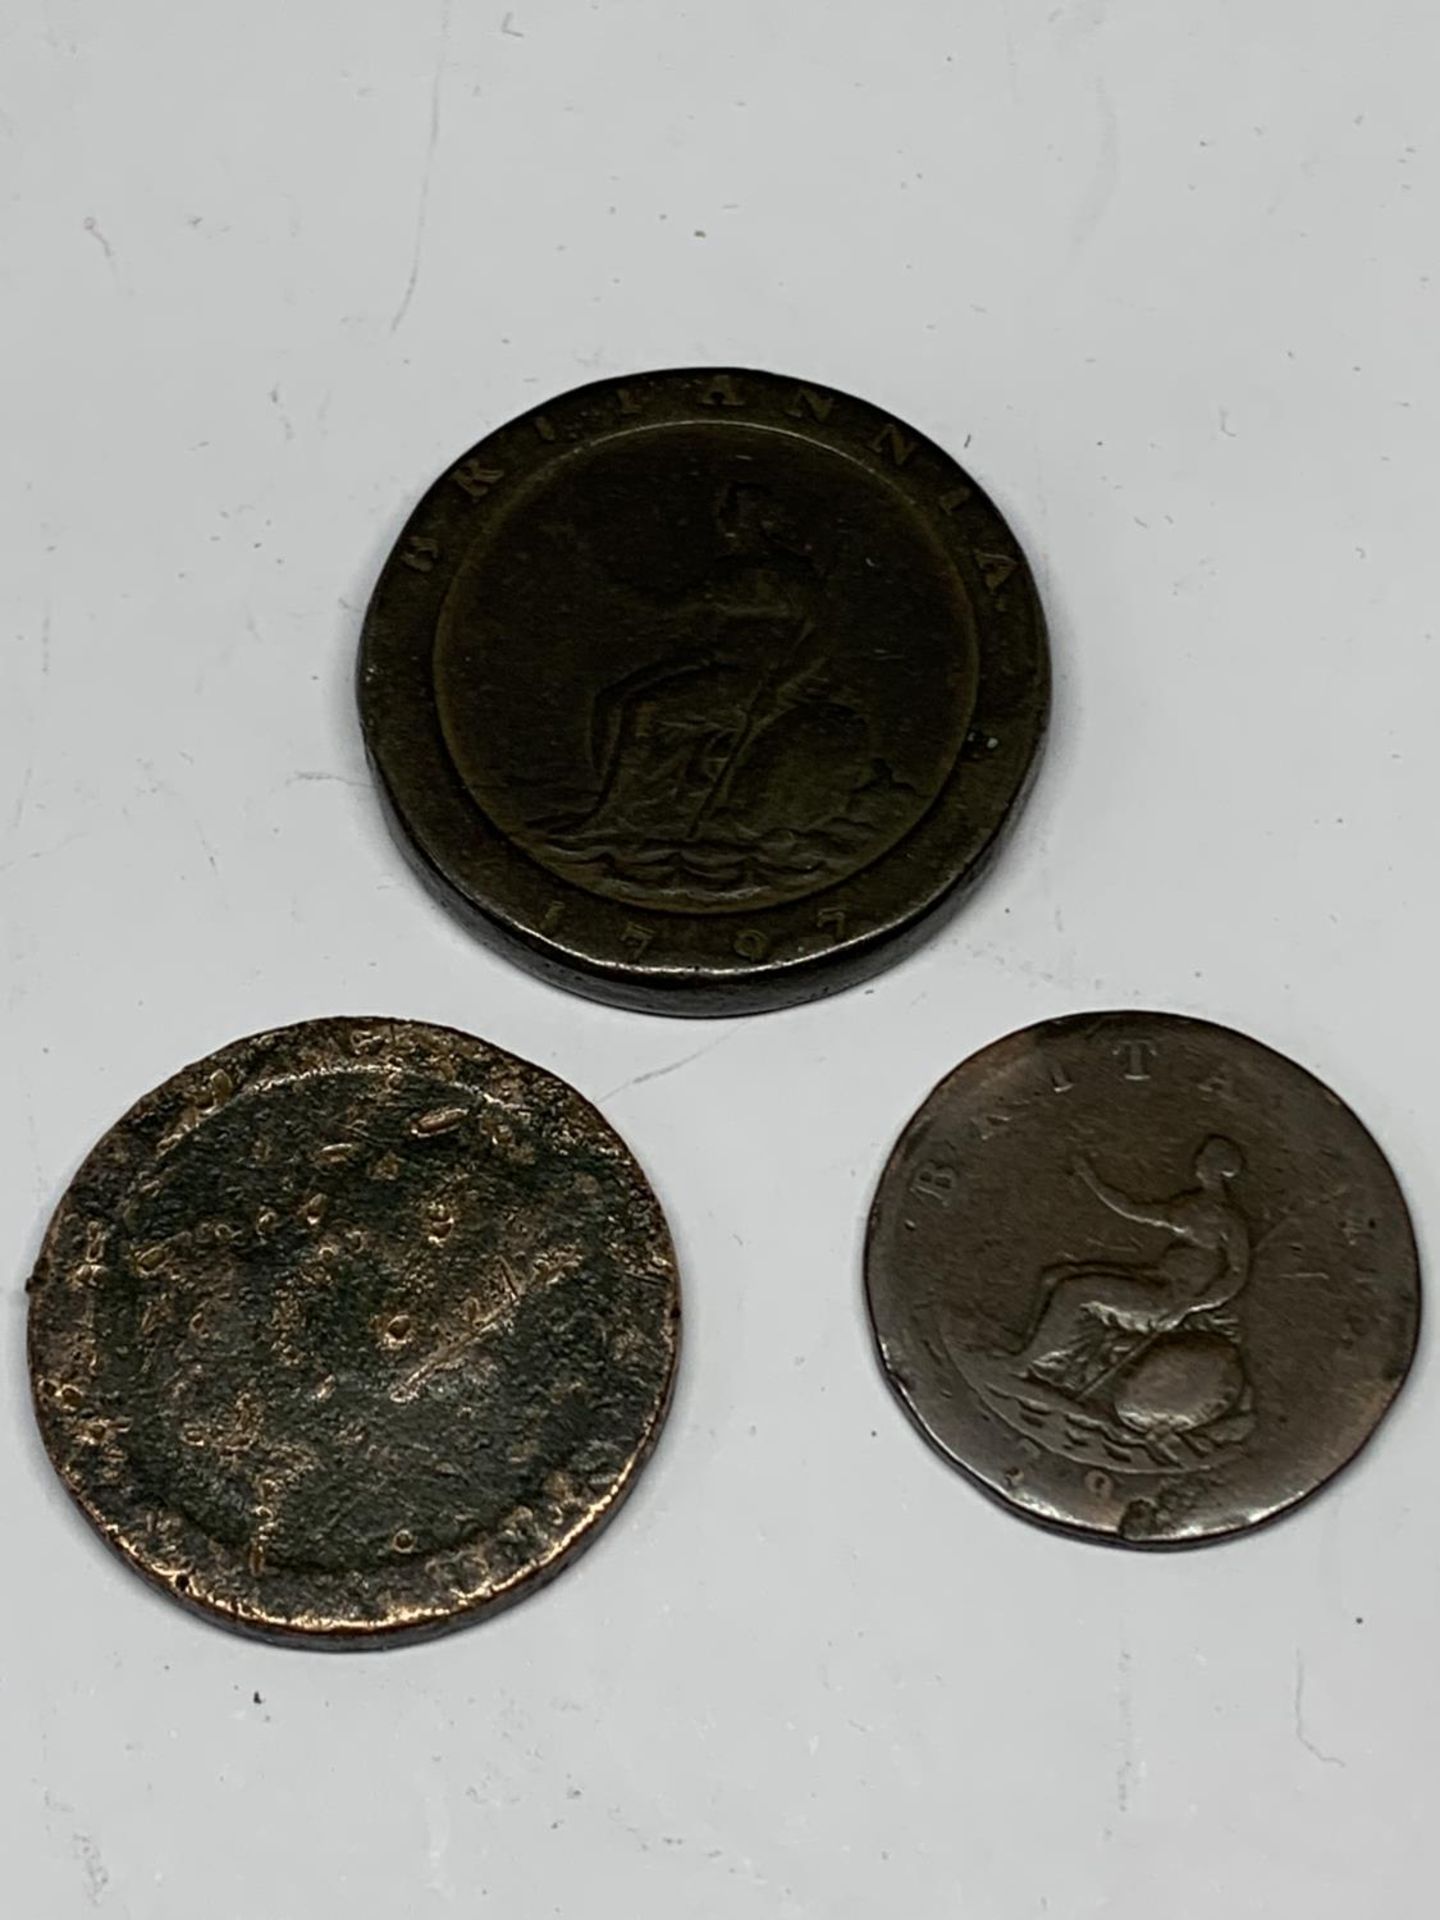 THREE GEORGE III COINS